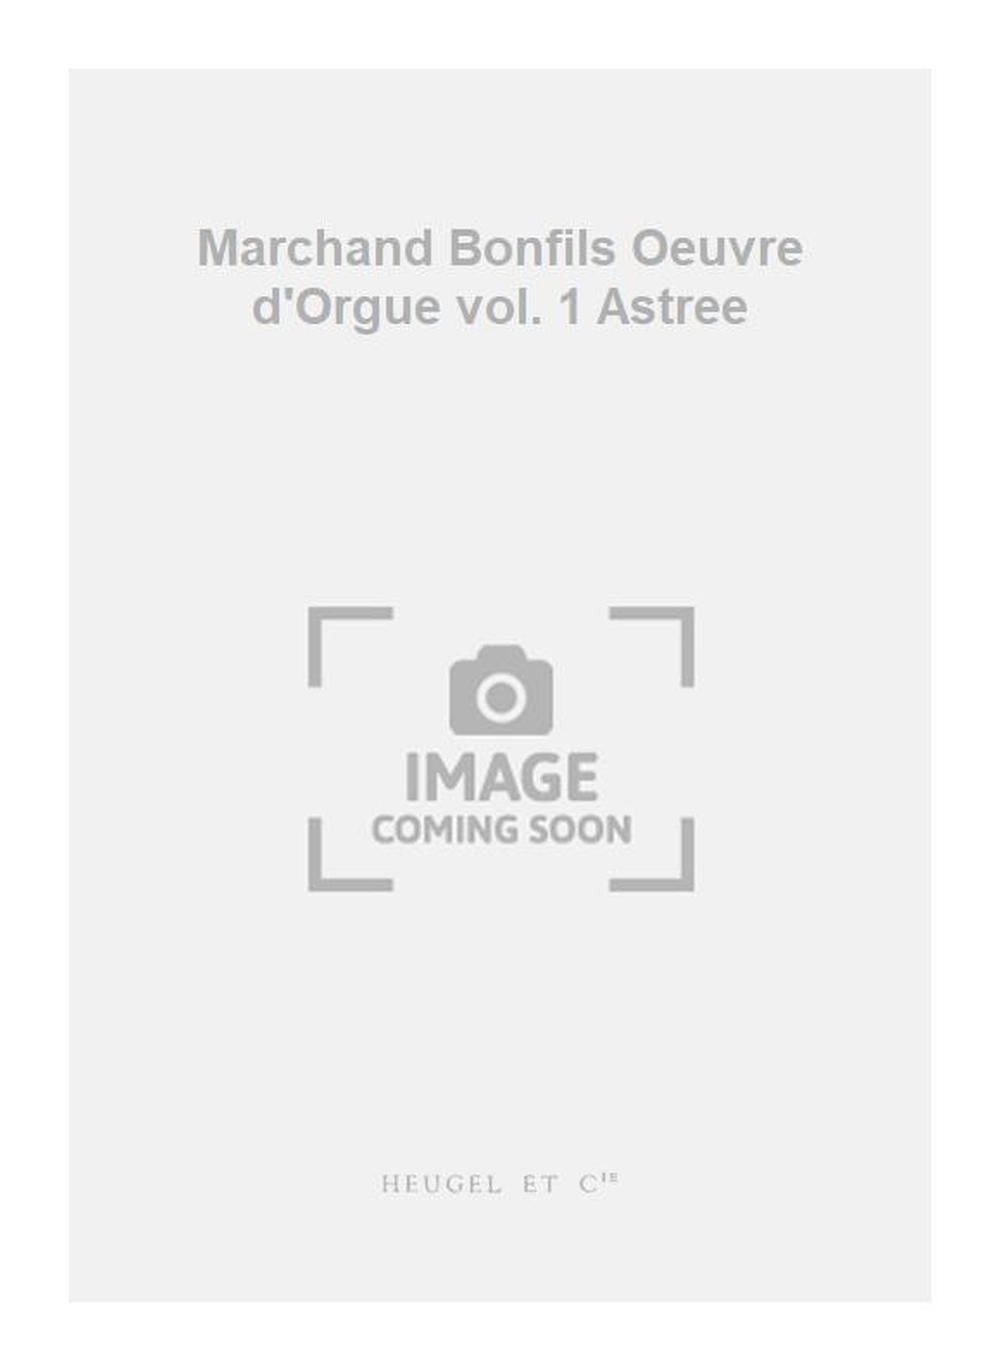 Louis Marchand: Marchand Bonfils Oeuvre d'Orgue vol. 1 Astree